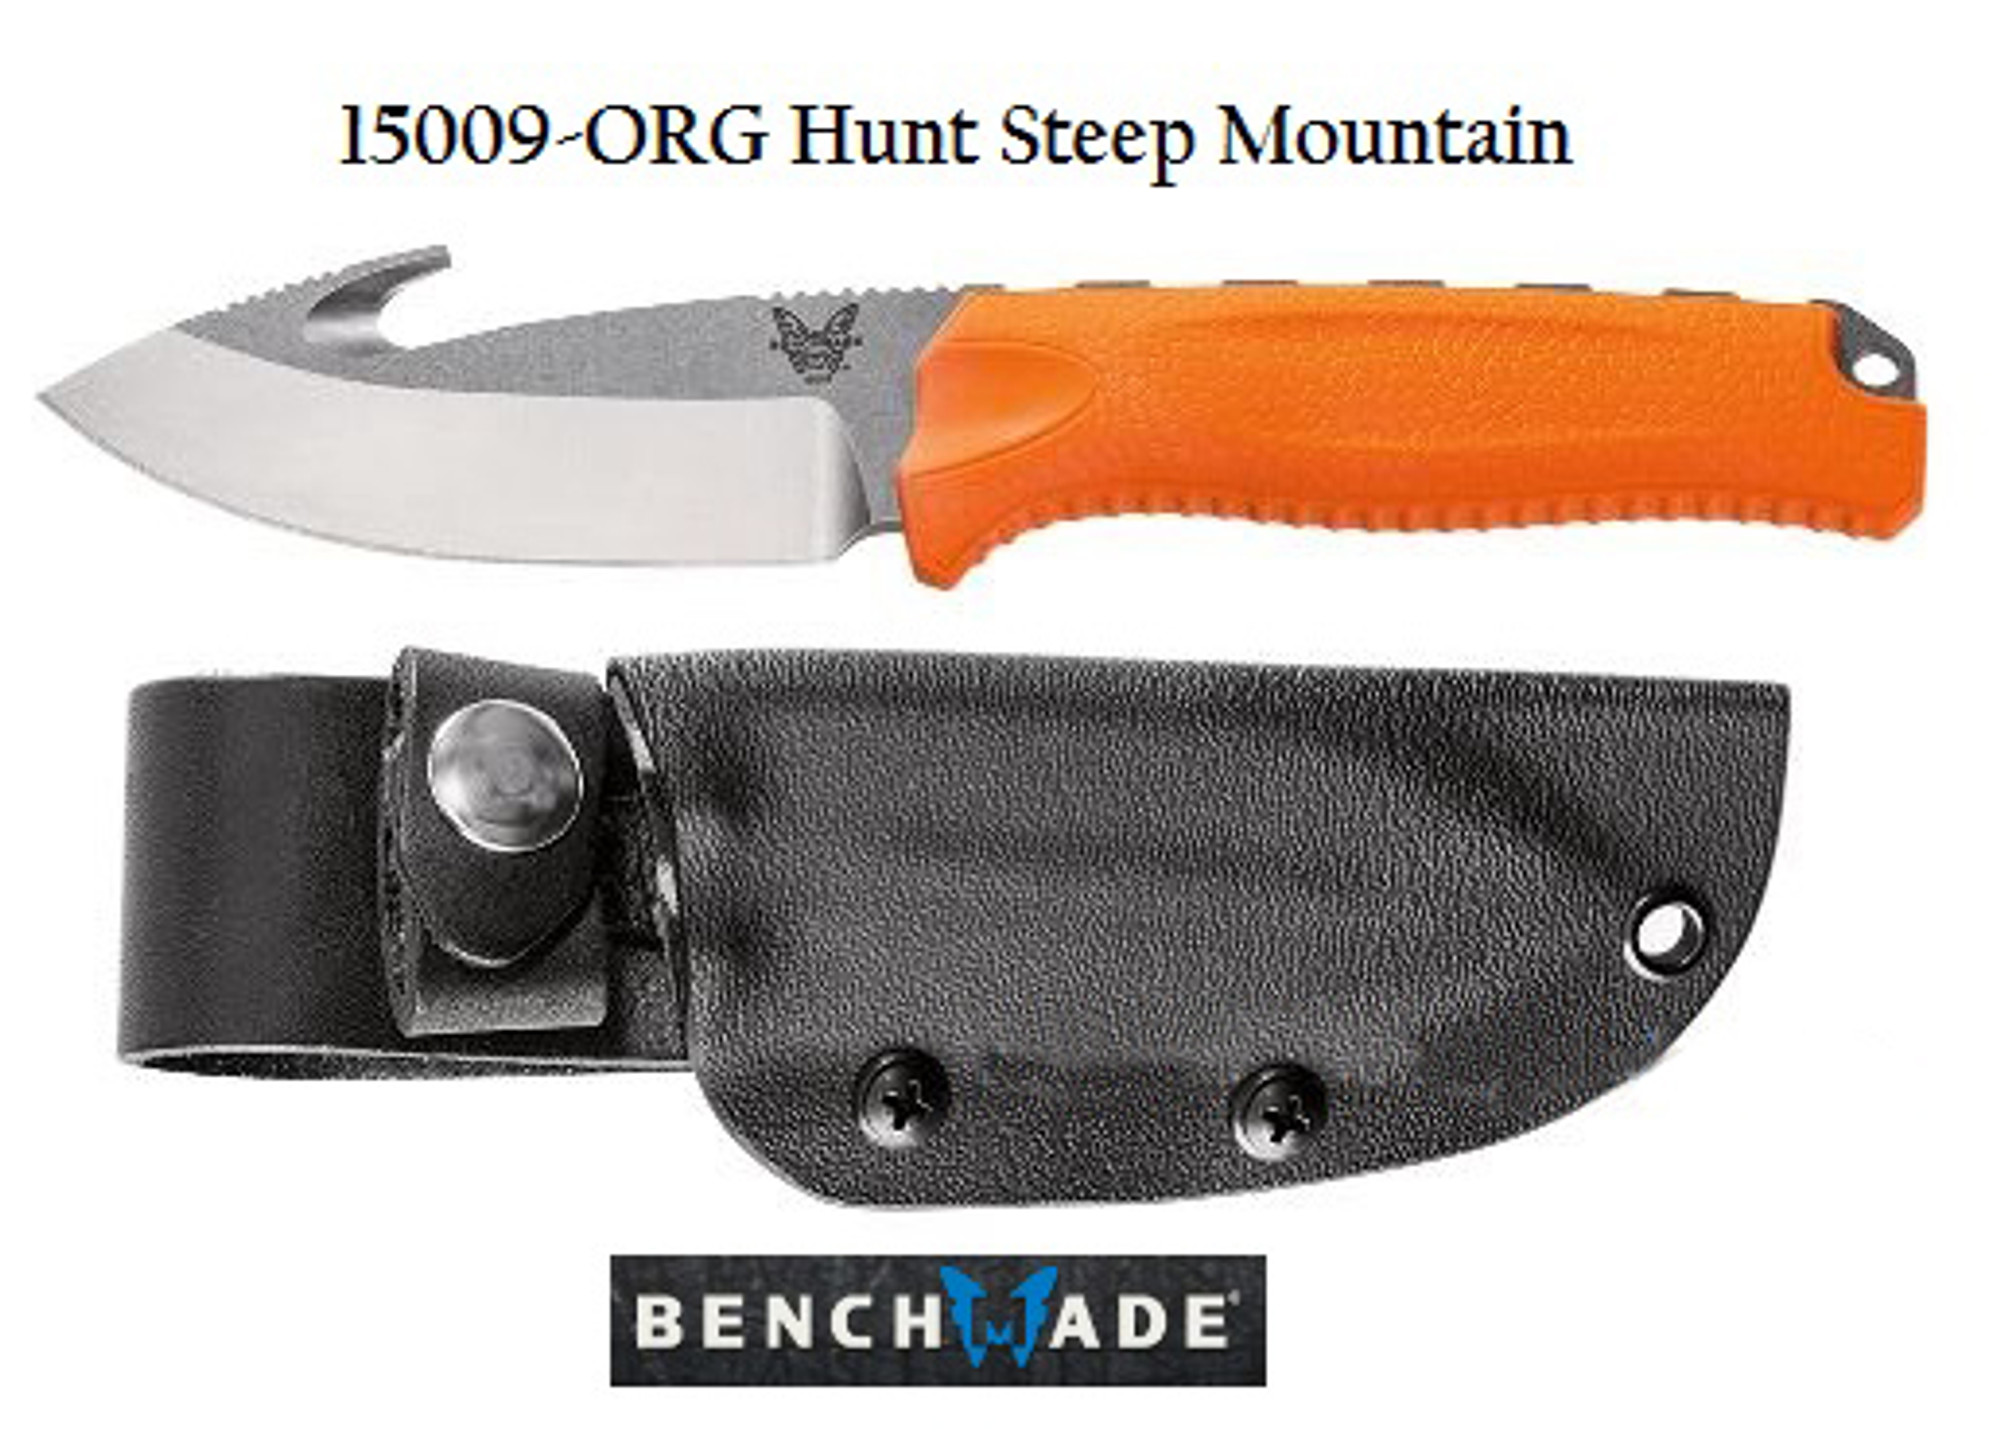 Benchmade Hunt Steep Mountain w/ Hook - Orange Handle 15009